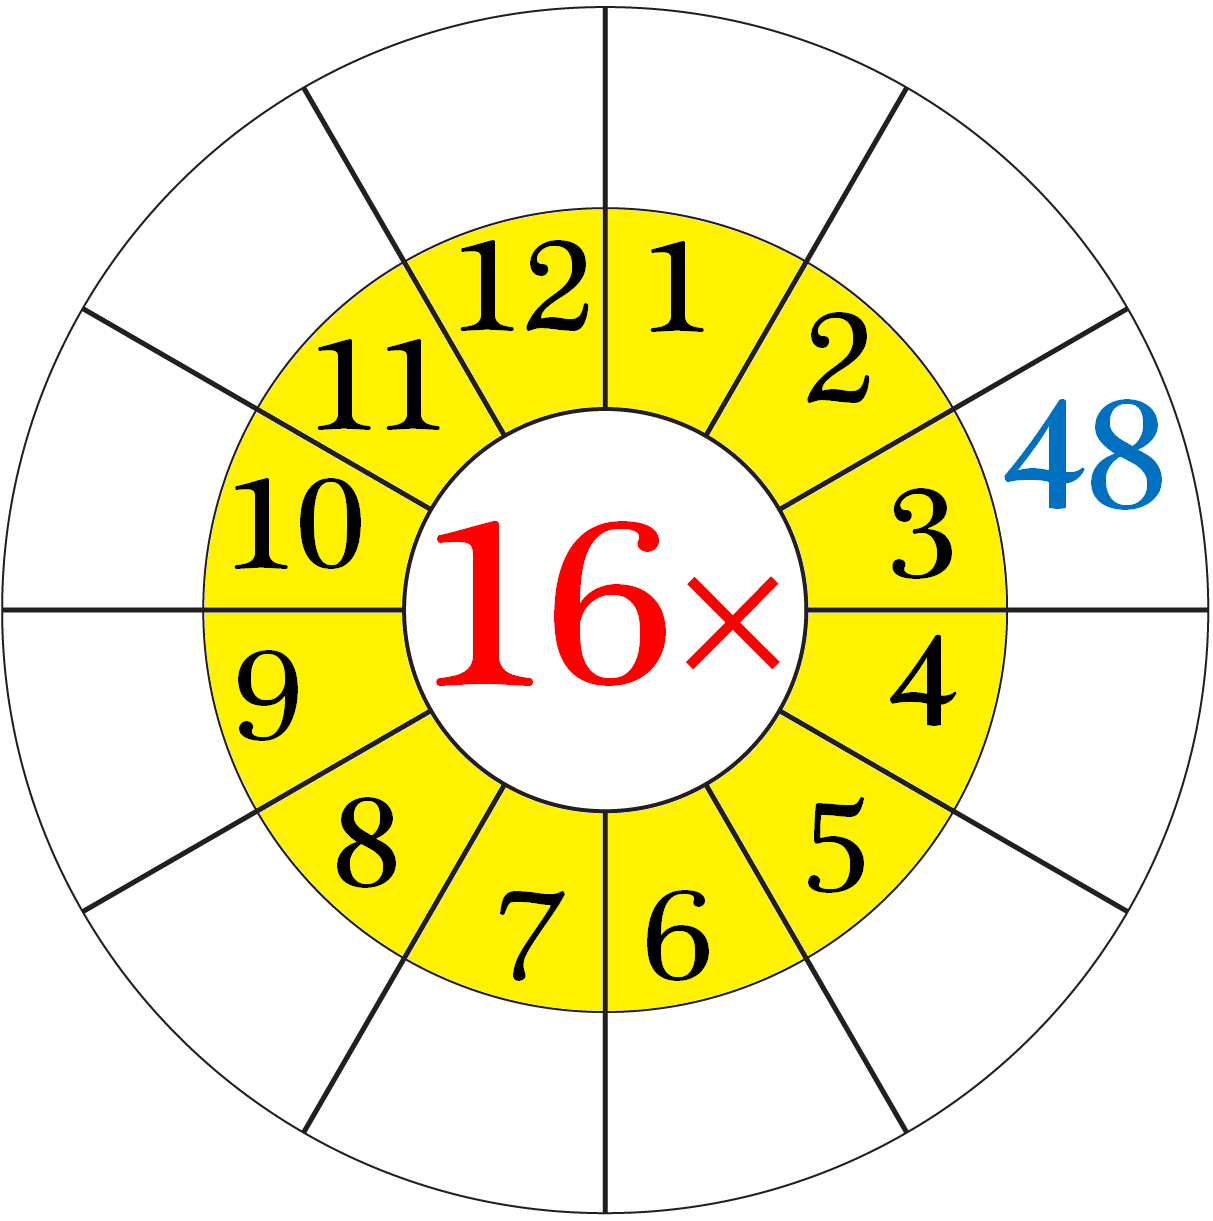 Worksheet on Multiplication Table of 16